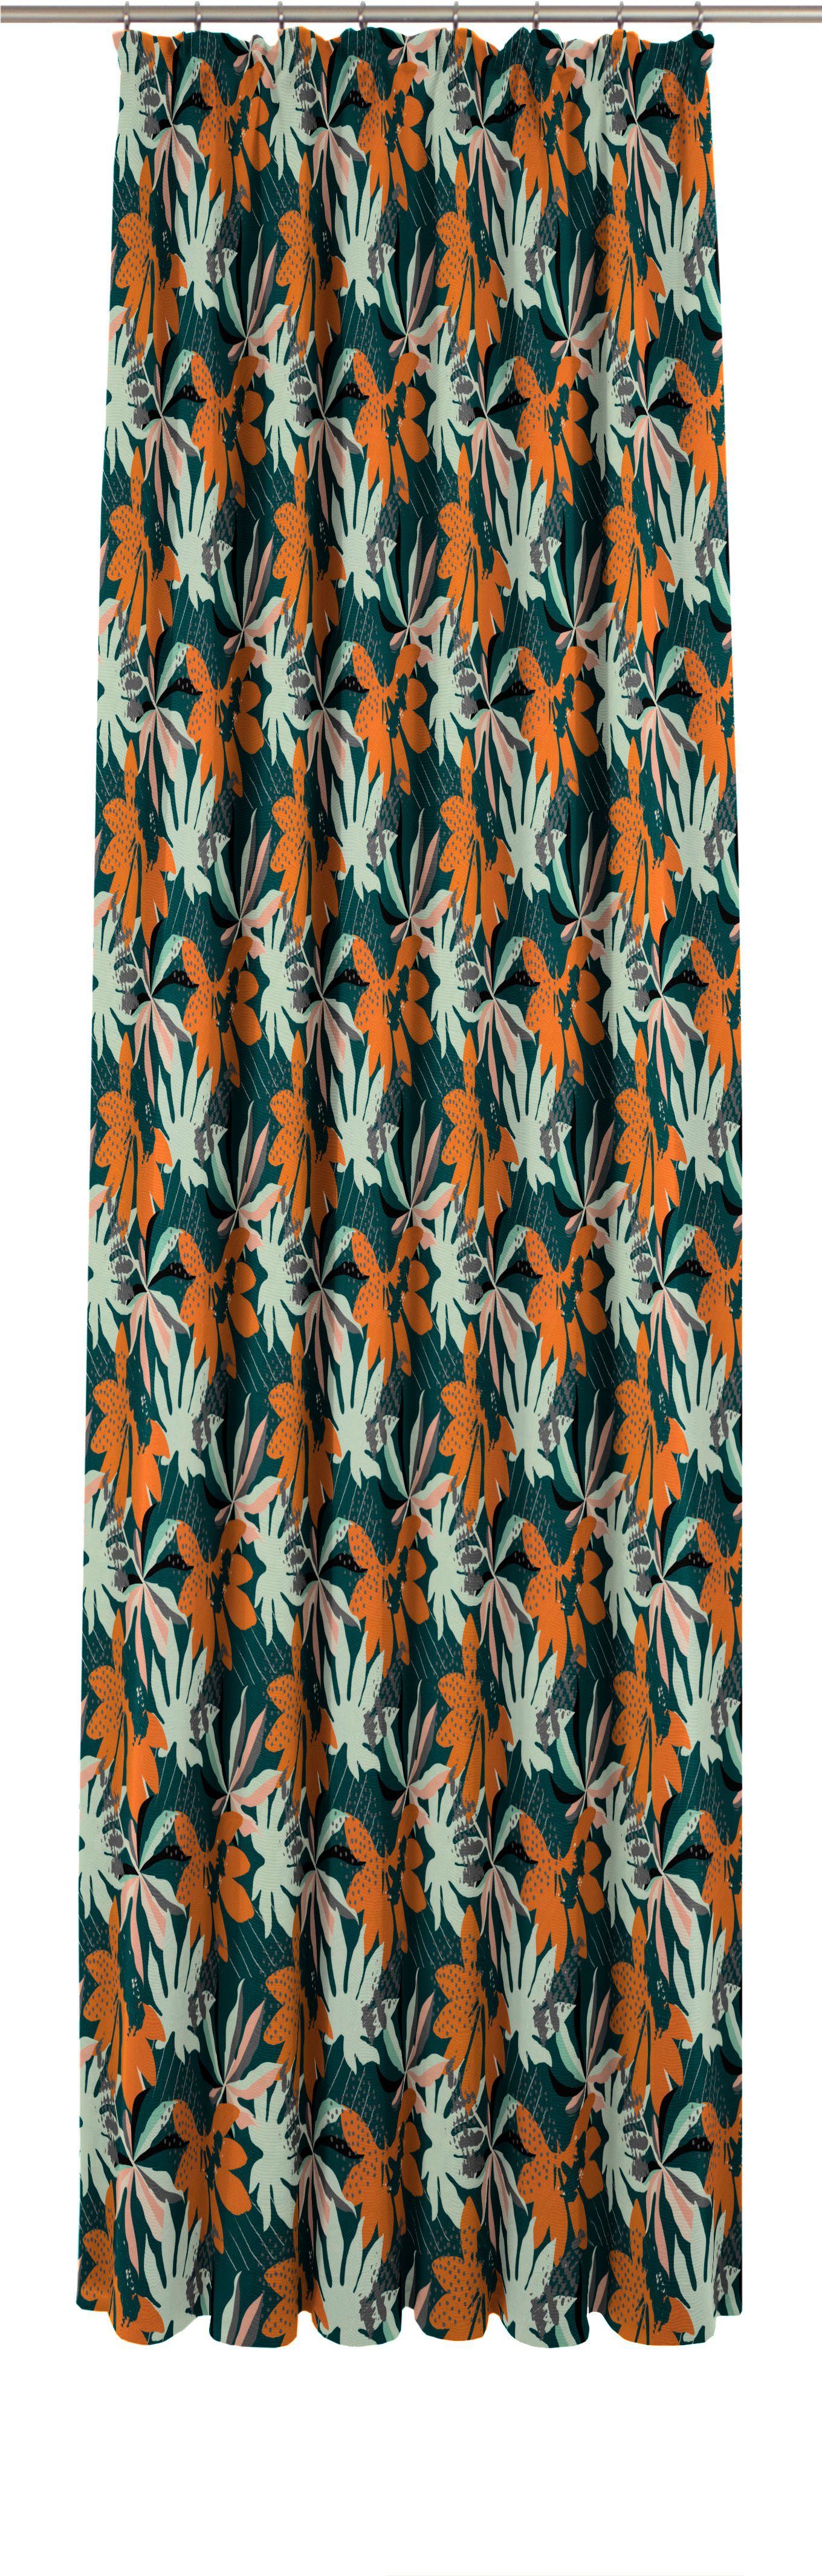 Adam, Kräuselband (1 Vorhang Jungle, orange/dunkelgrün Jacquard, blickdicht, St), nachhaltig